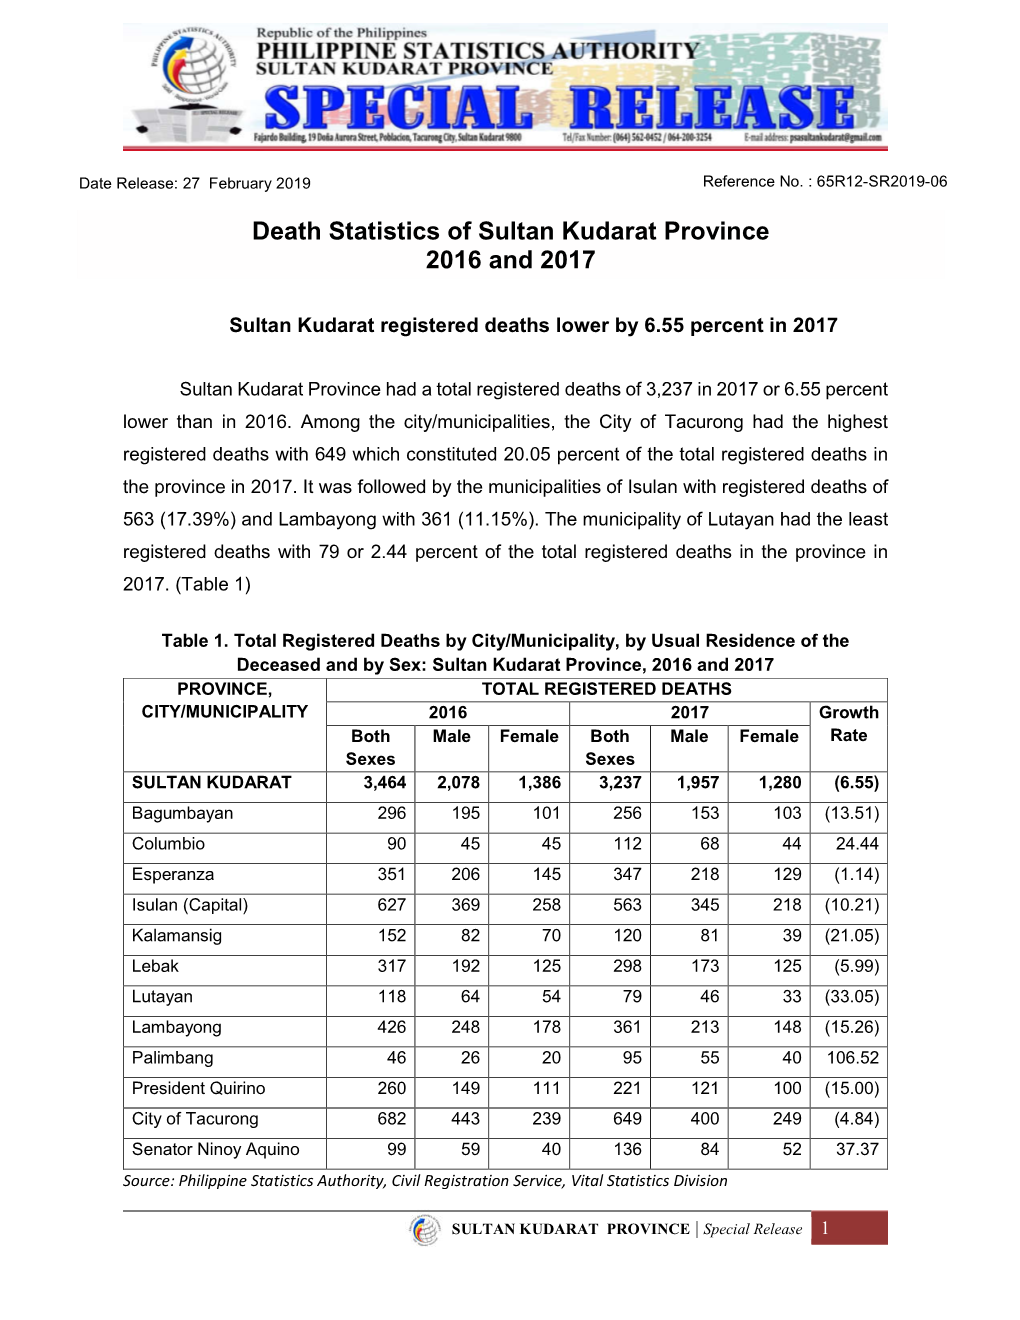 Death Statistics of Sultan Kudarat Province 2016 and 2017